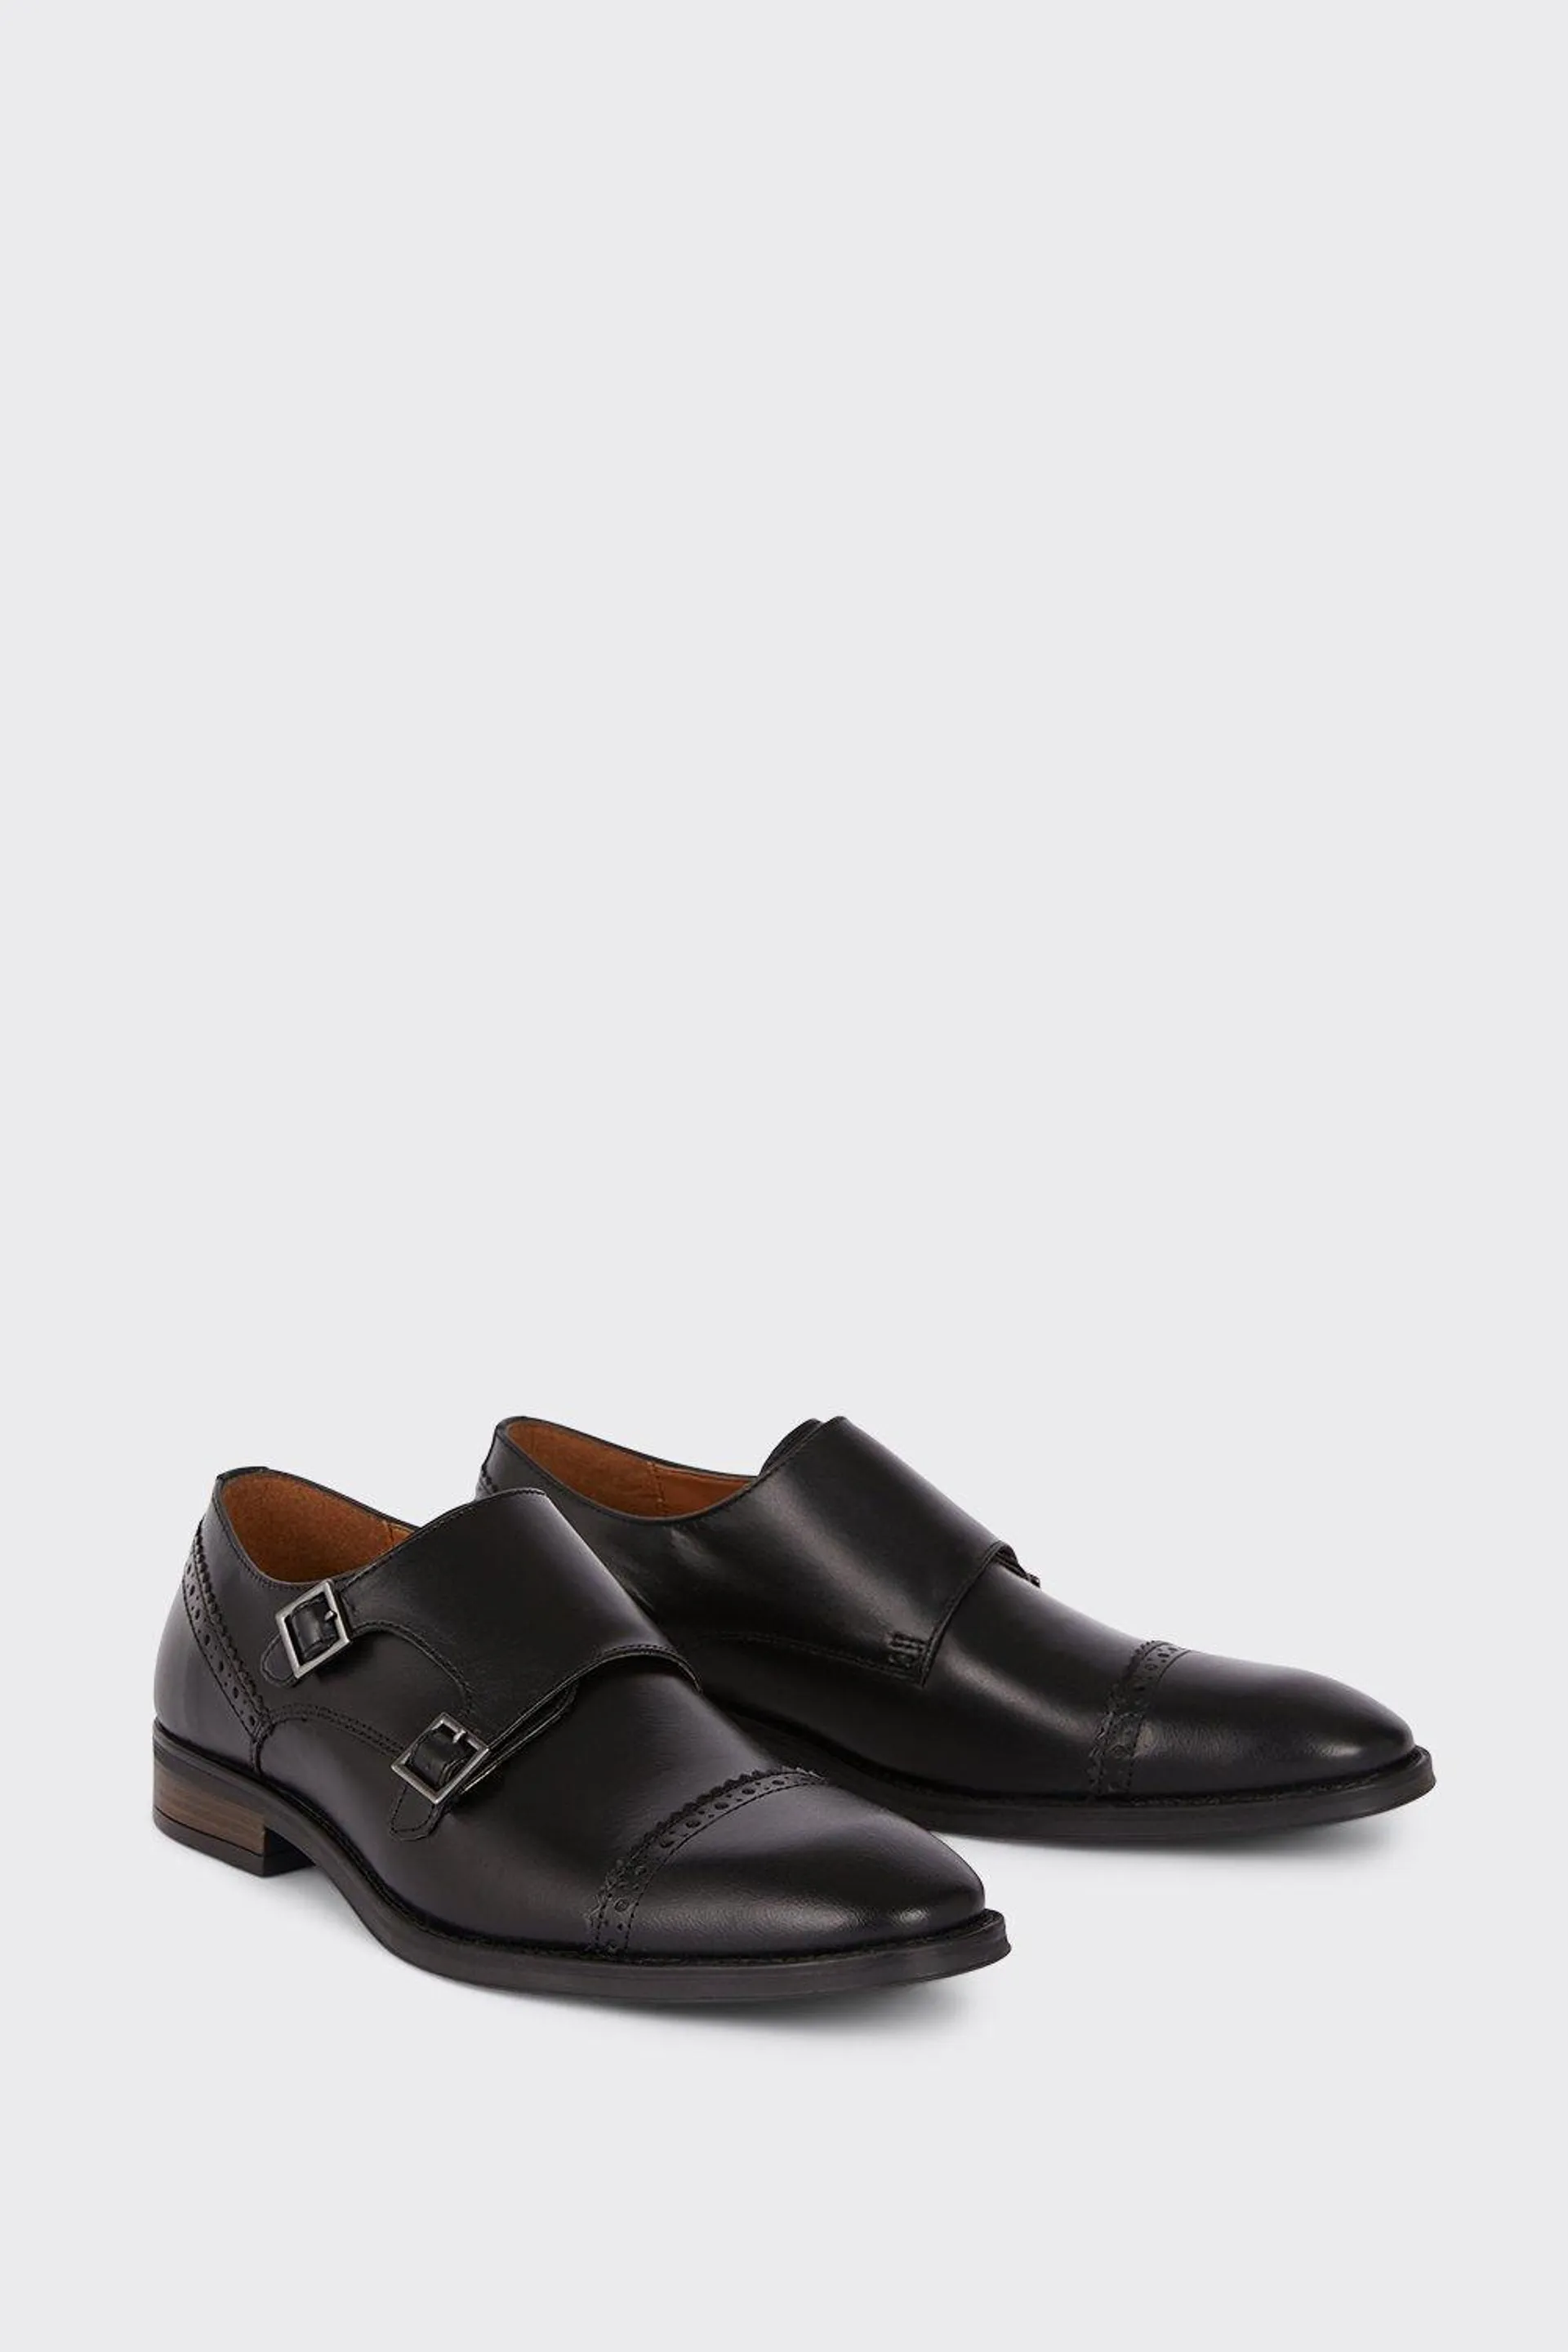 Leather Smart Black Brogue Monk Shoes